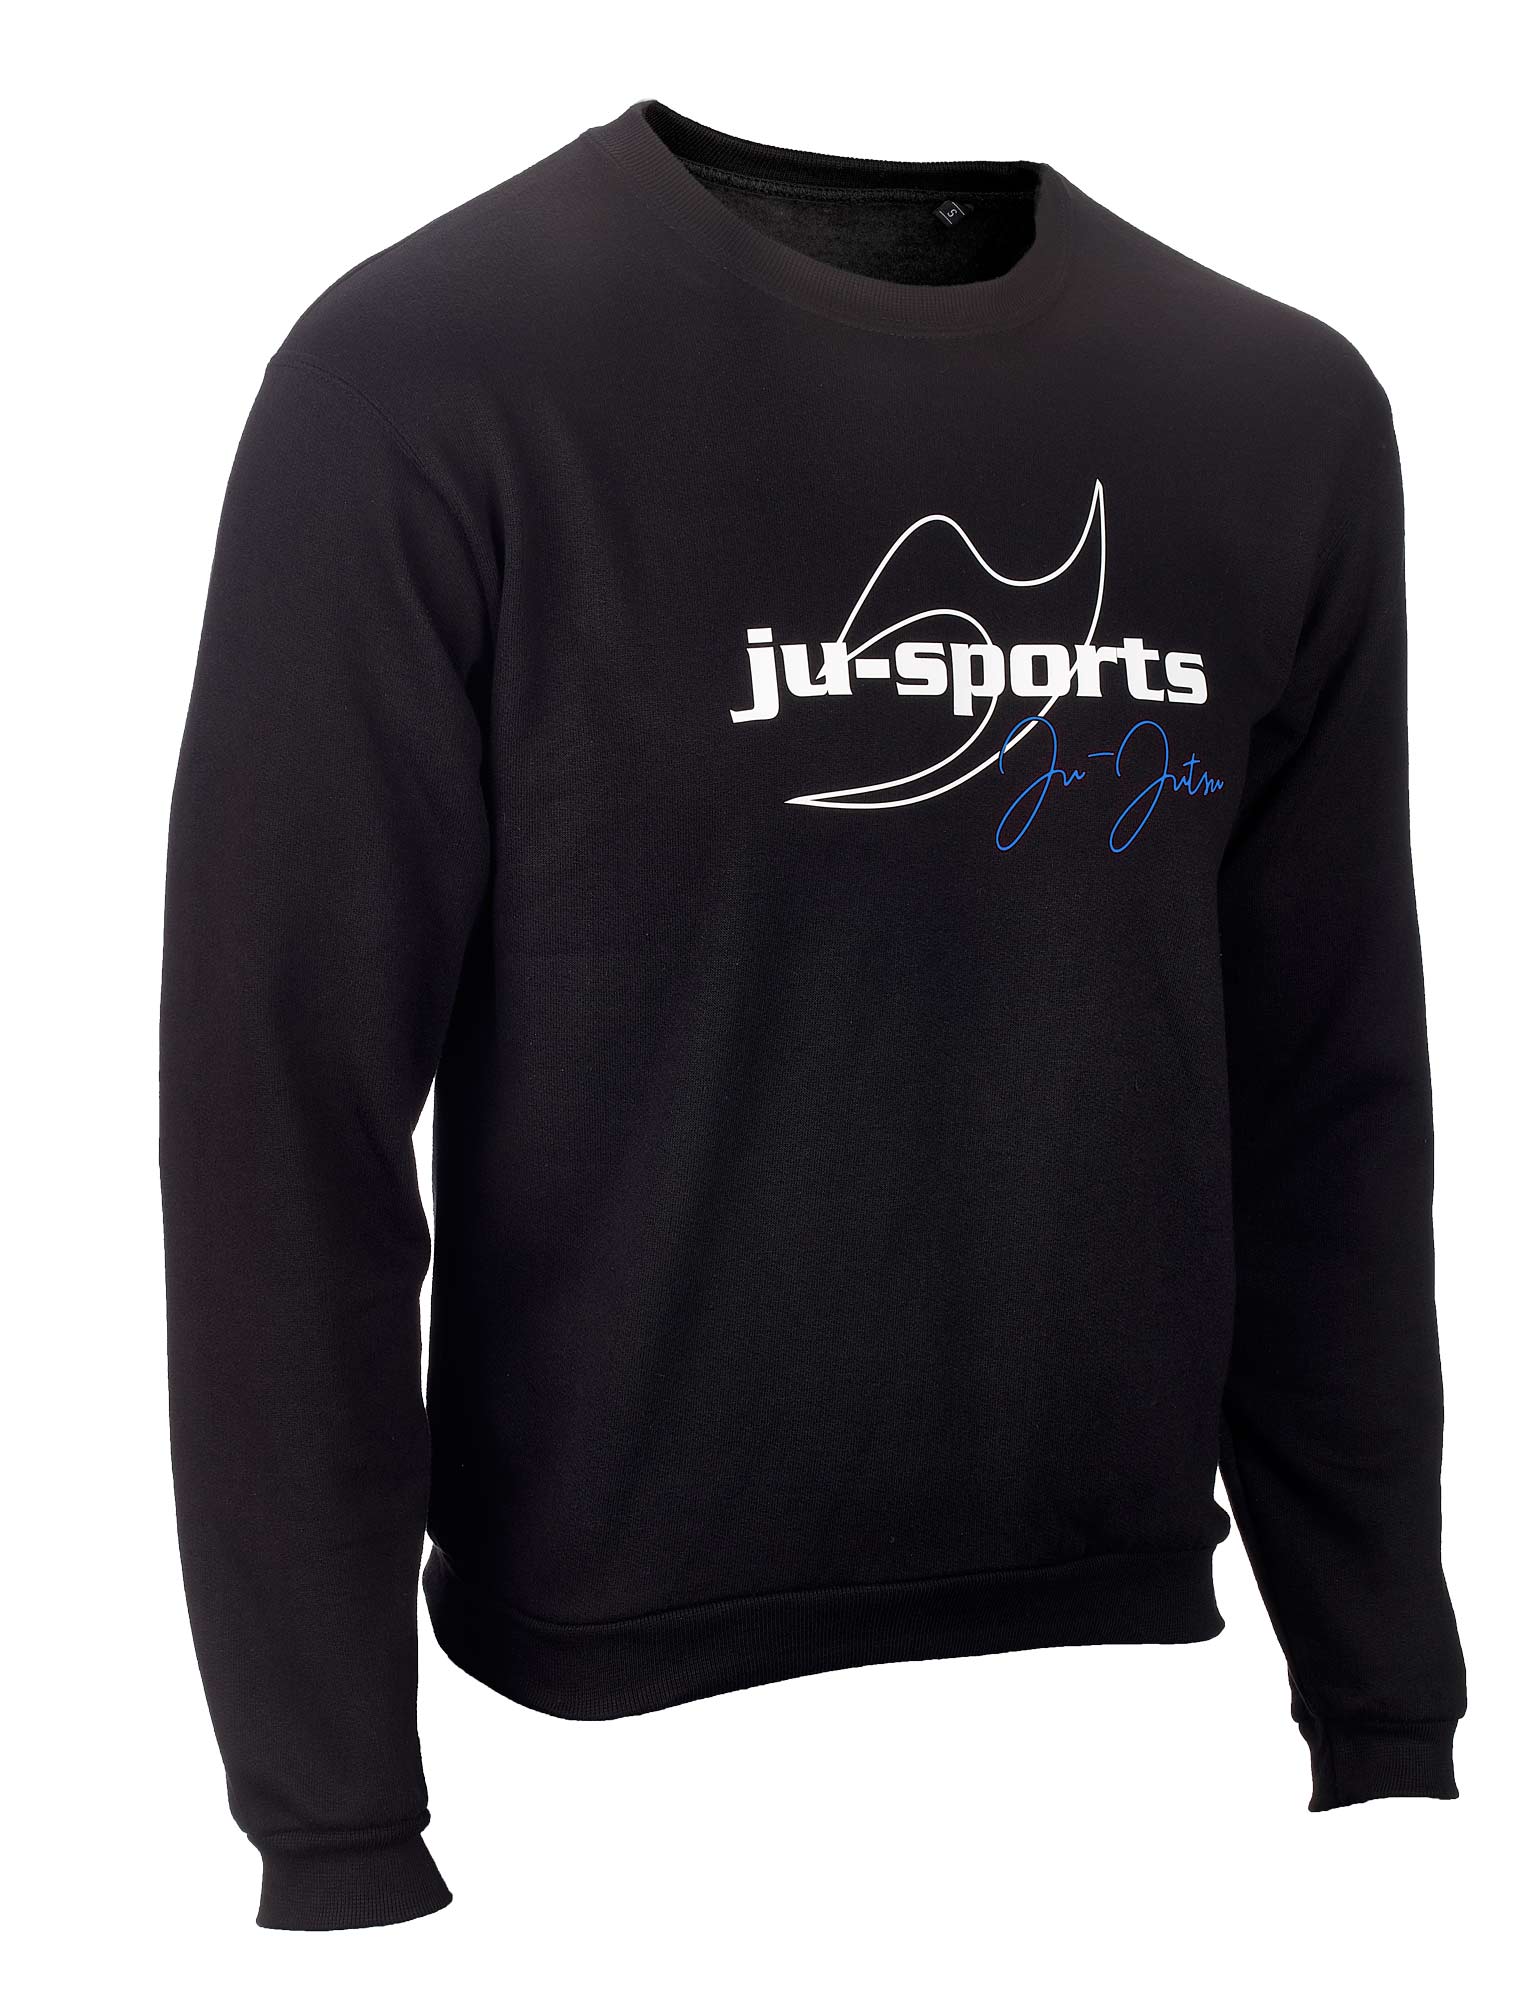 Ju-Sports Signature Line "Ju-Jutsu" Sweater